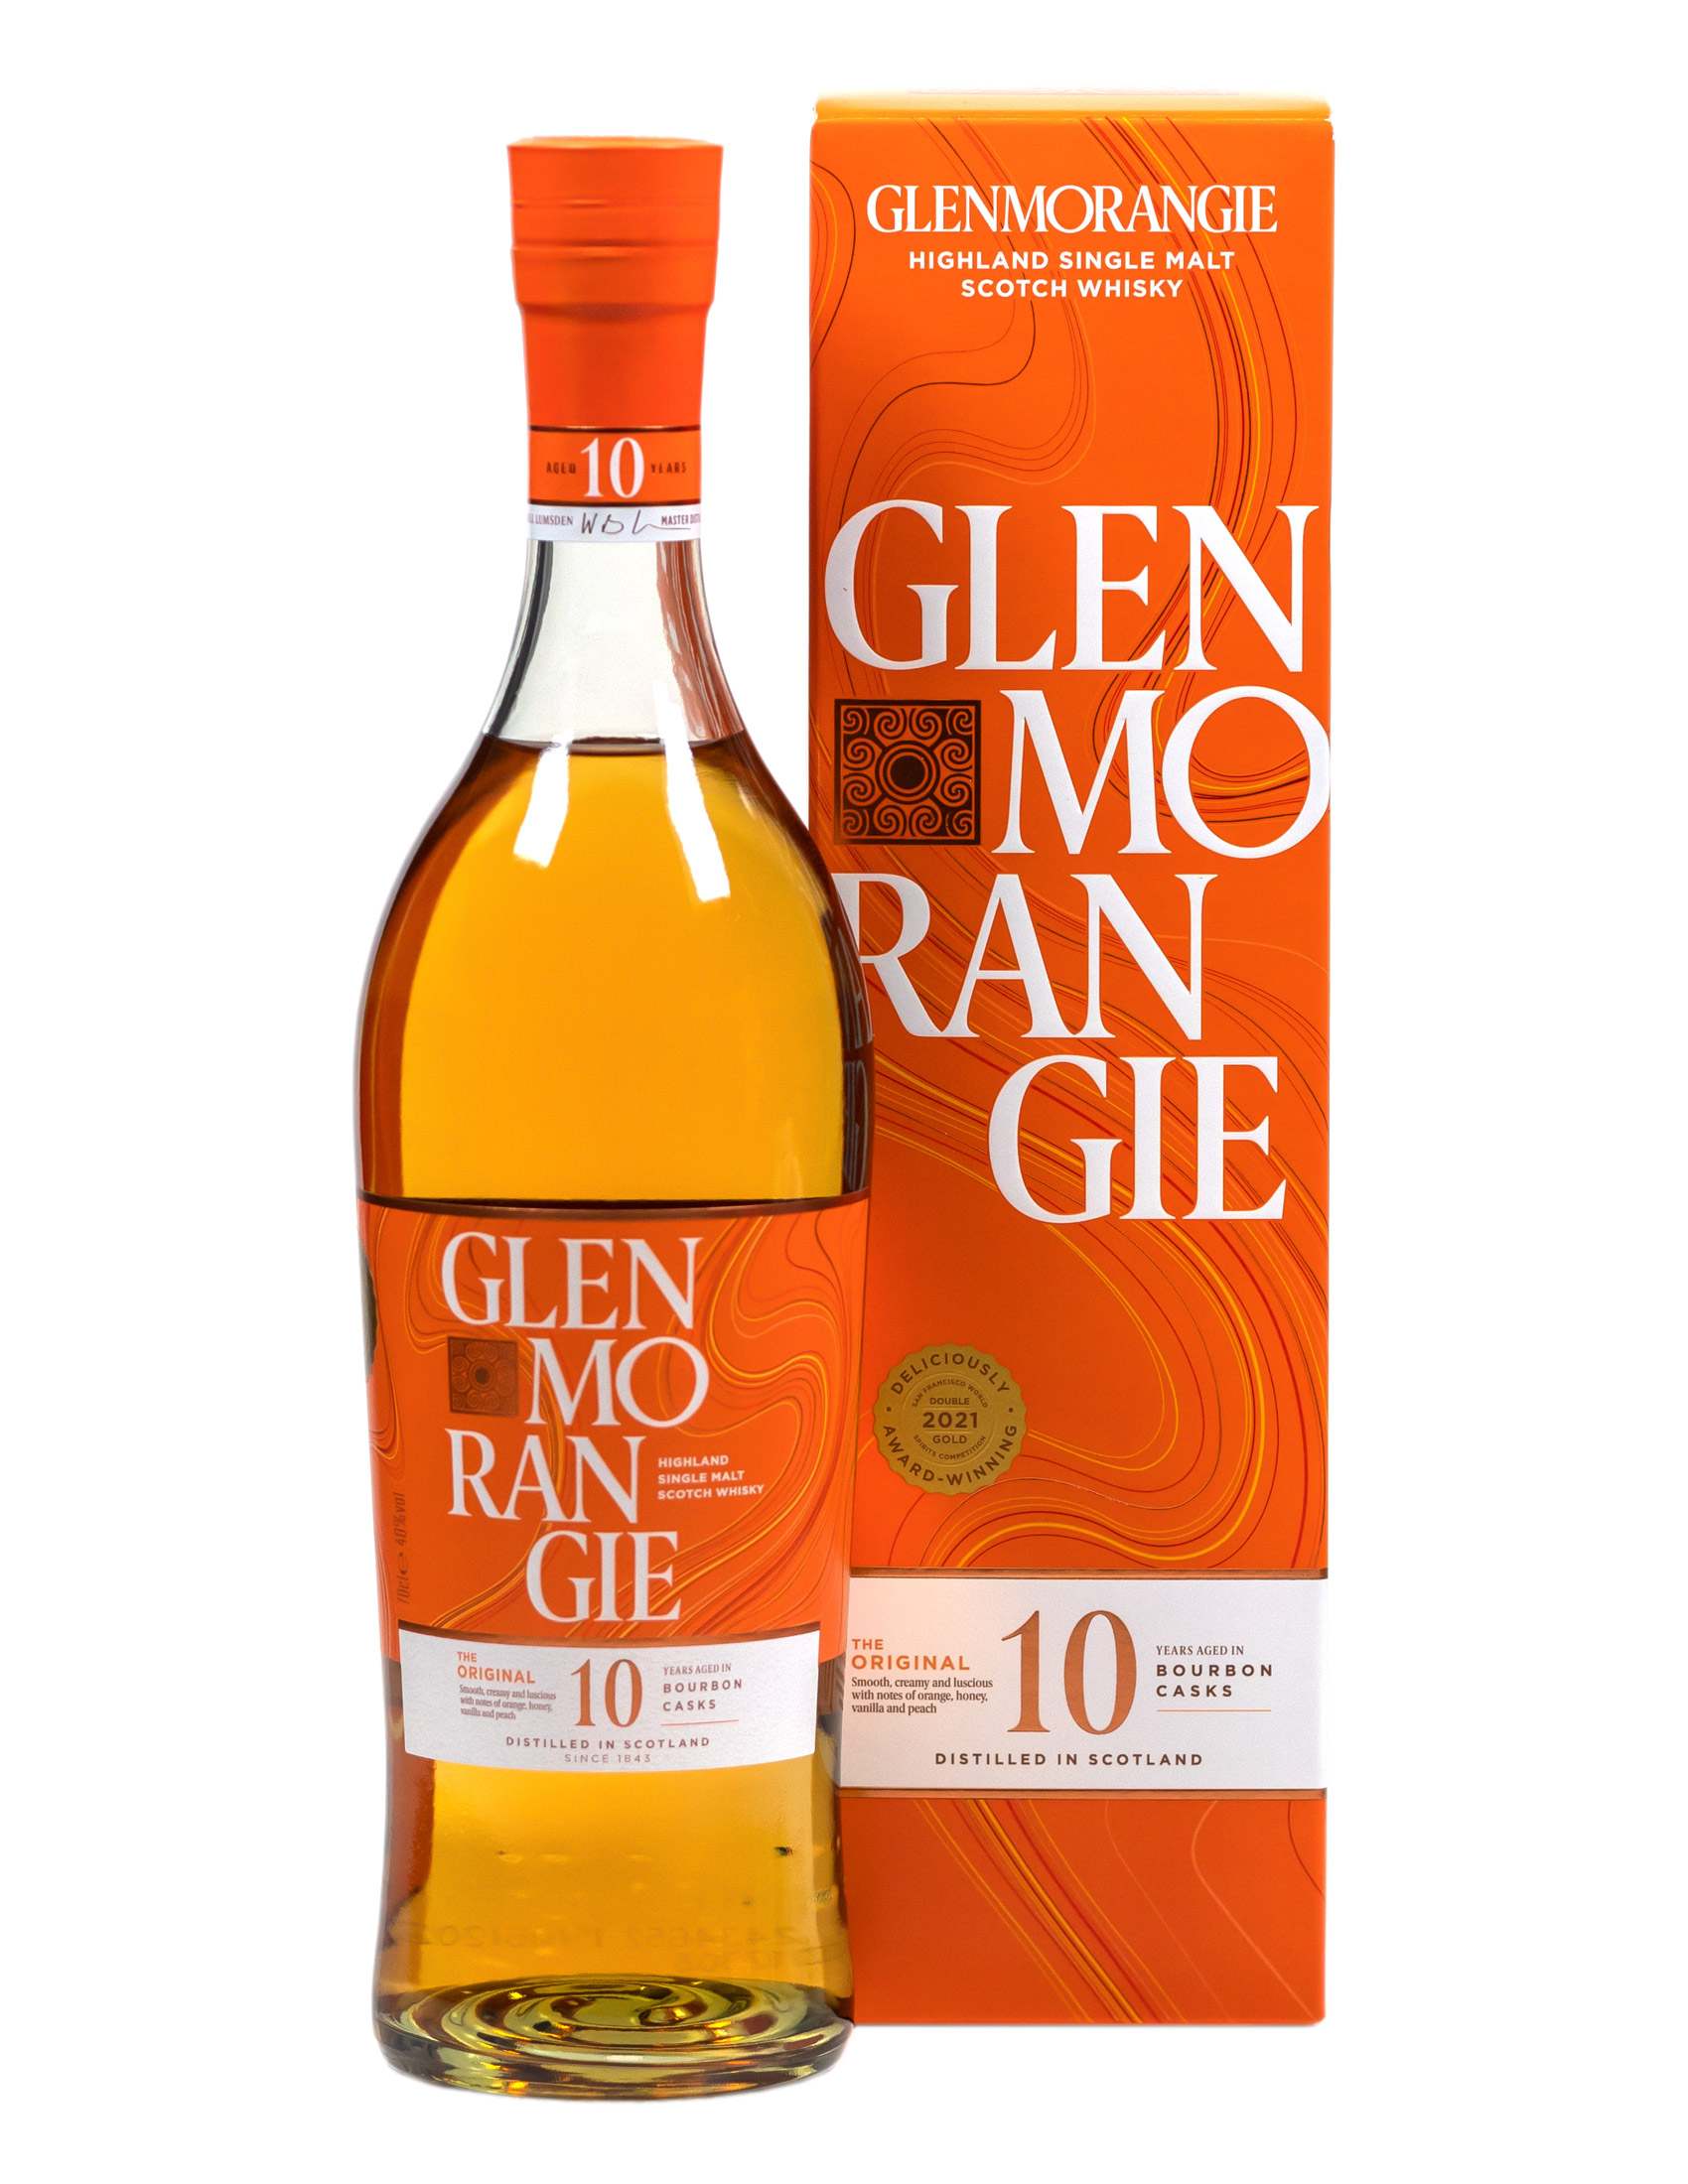 Glenmorangie Original 10 Years | Whisky.de Austria » To the online store